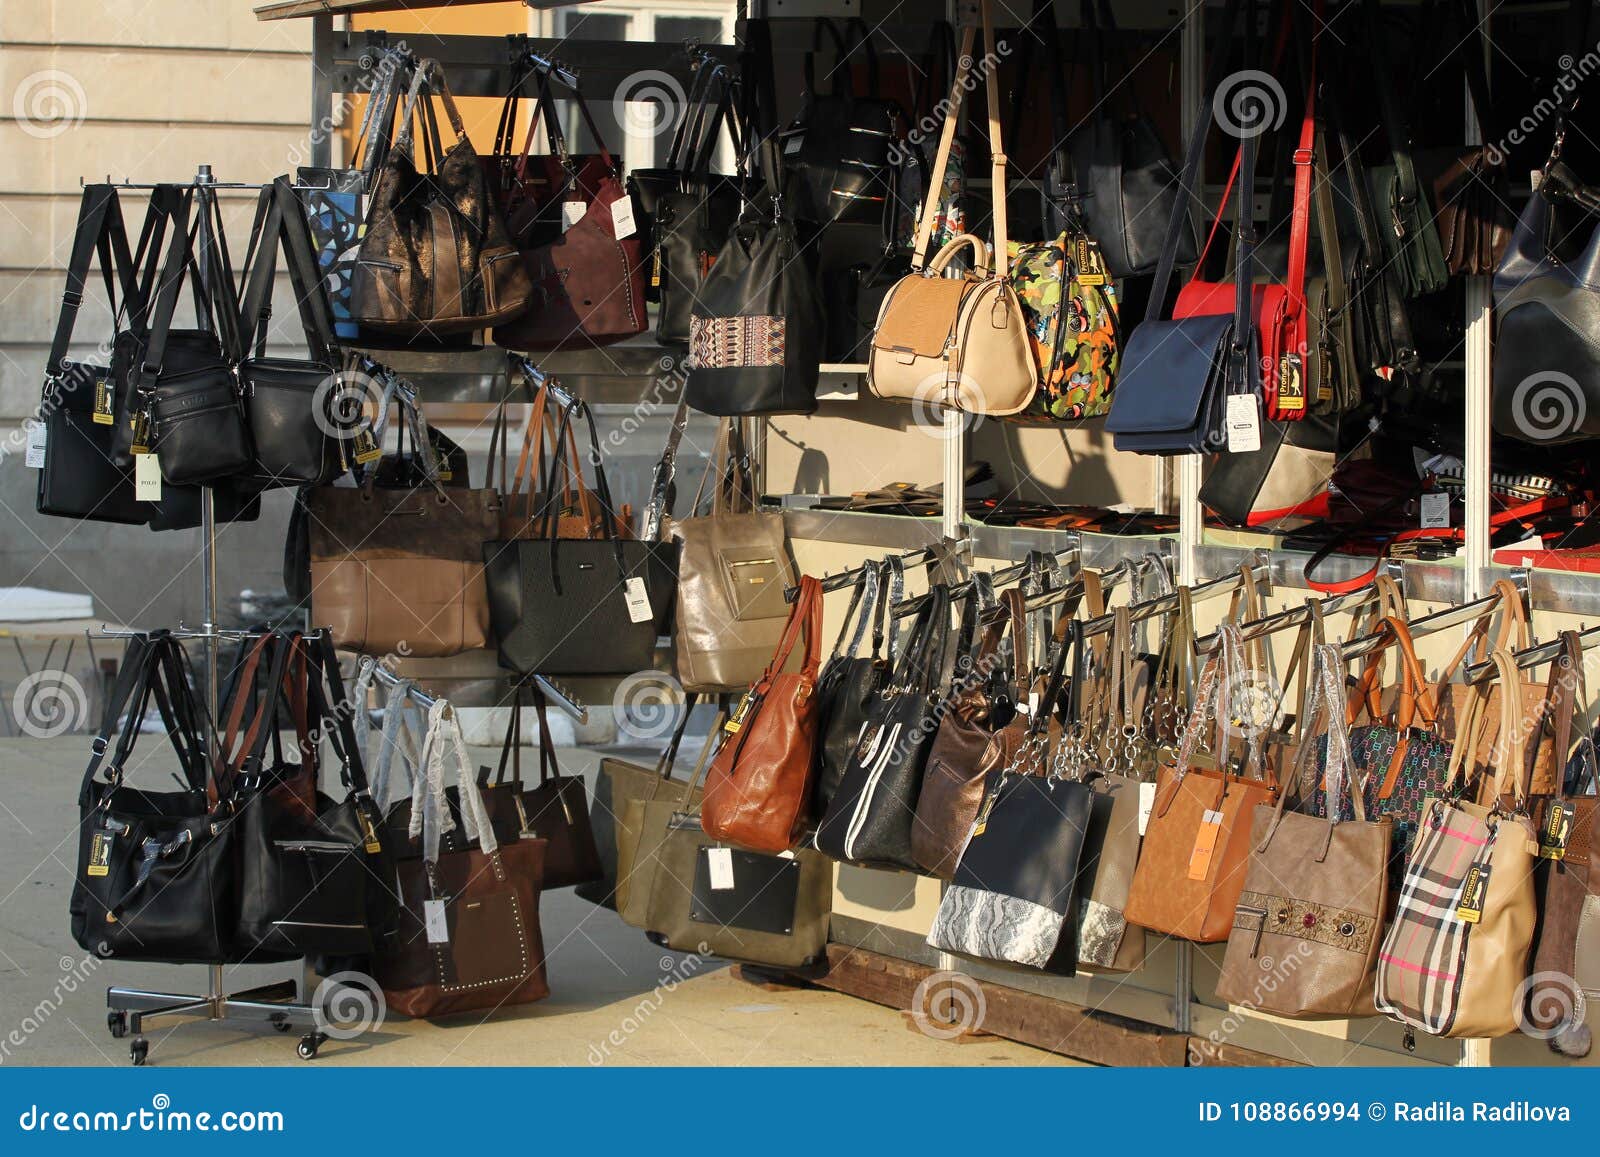 Designer Replica Handbags: Styles & Where to Buy | LoveToKnow